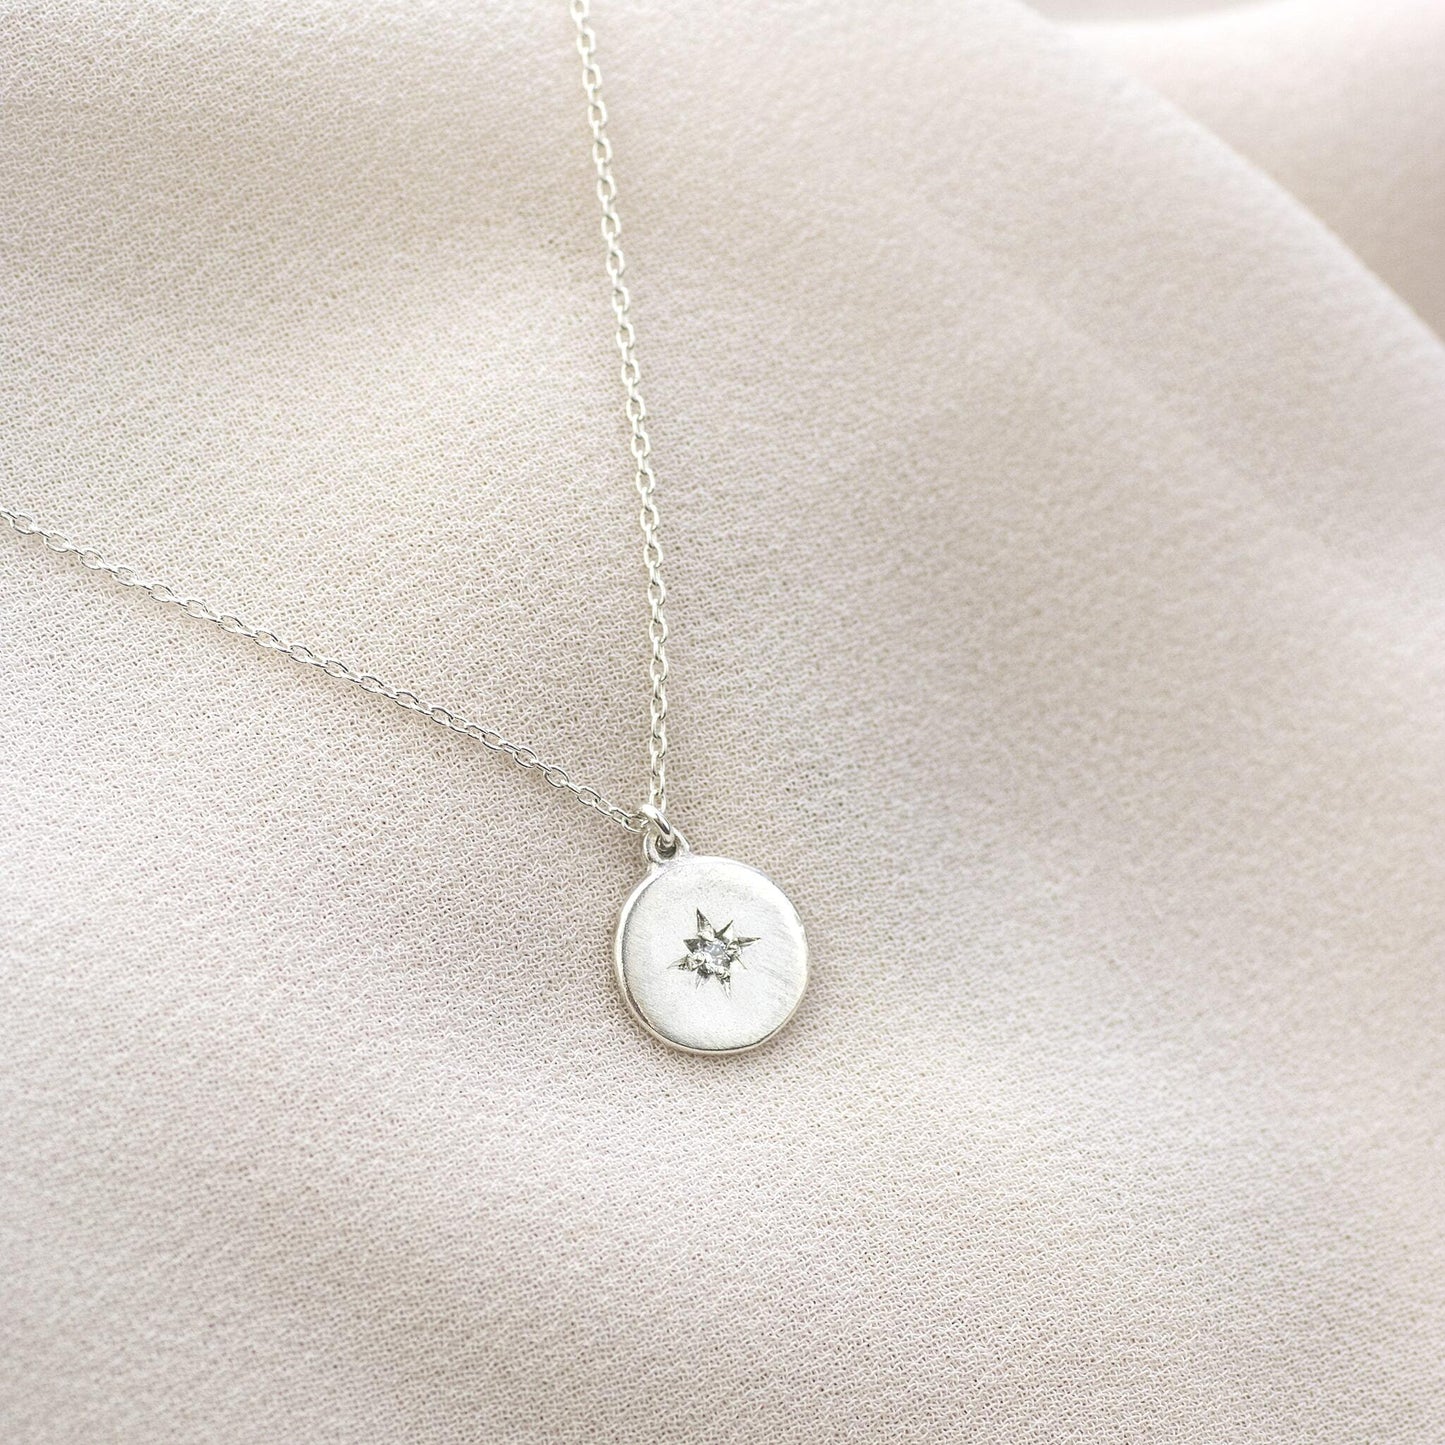 Birthstone Necklace - Silver Star Set Pendant